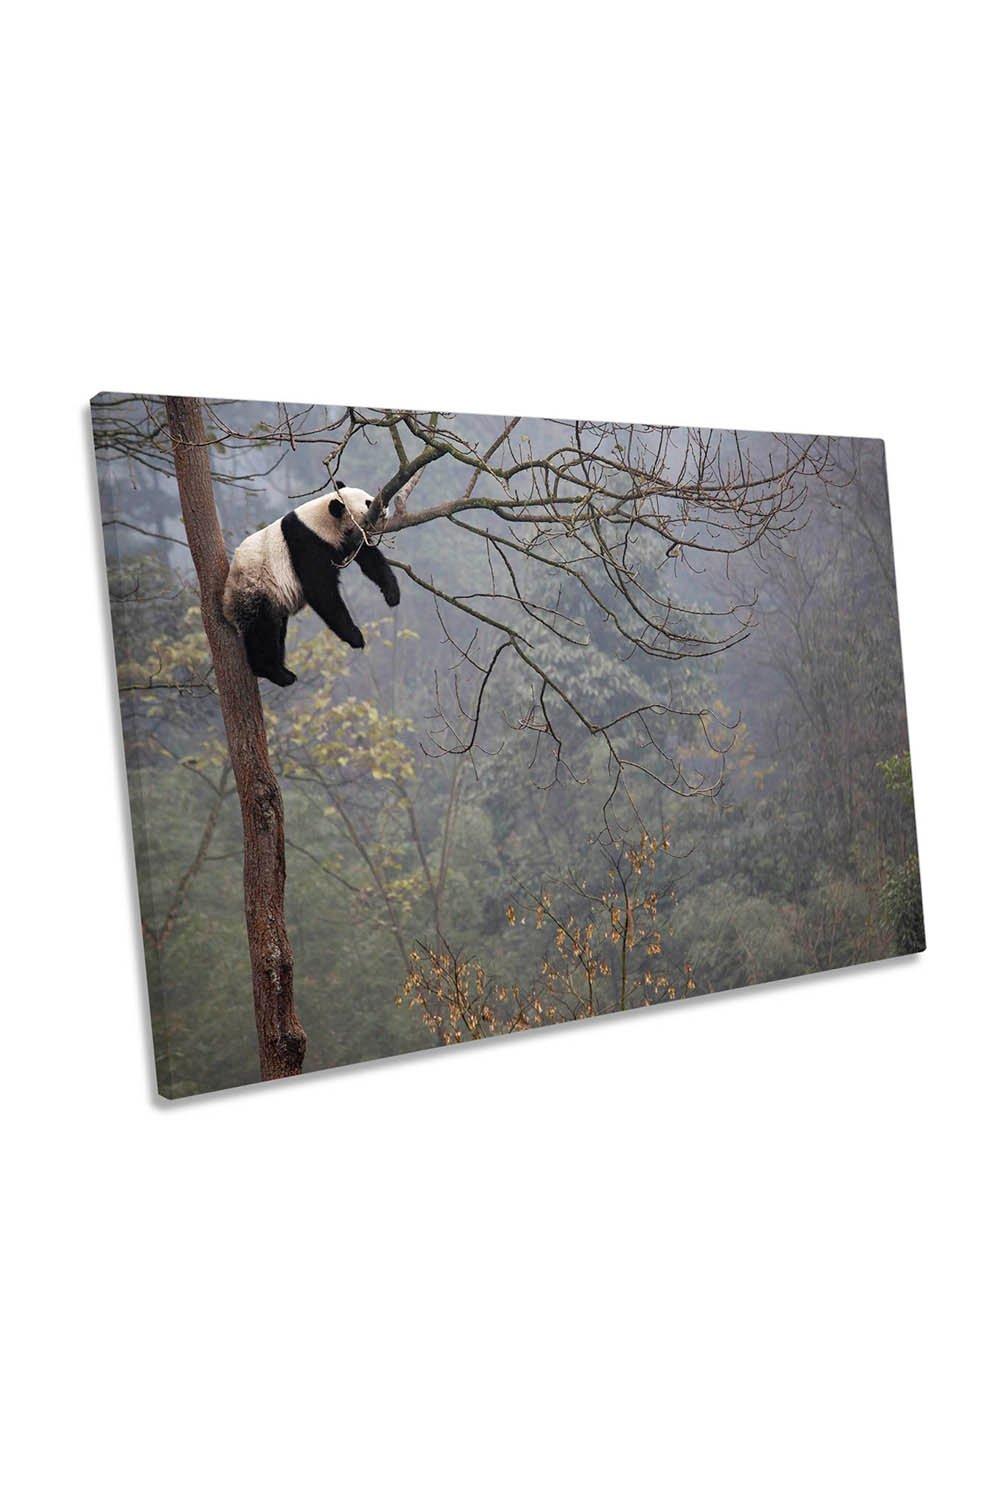 Lazy Panda Bear Sleeping Tree Humour Canvas Wall Art Picture Print